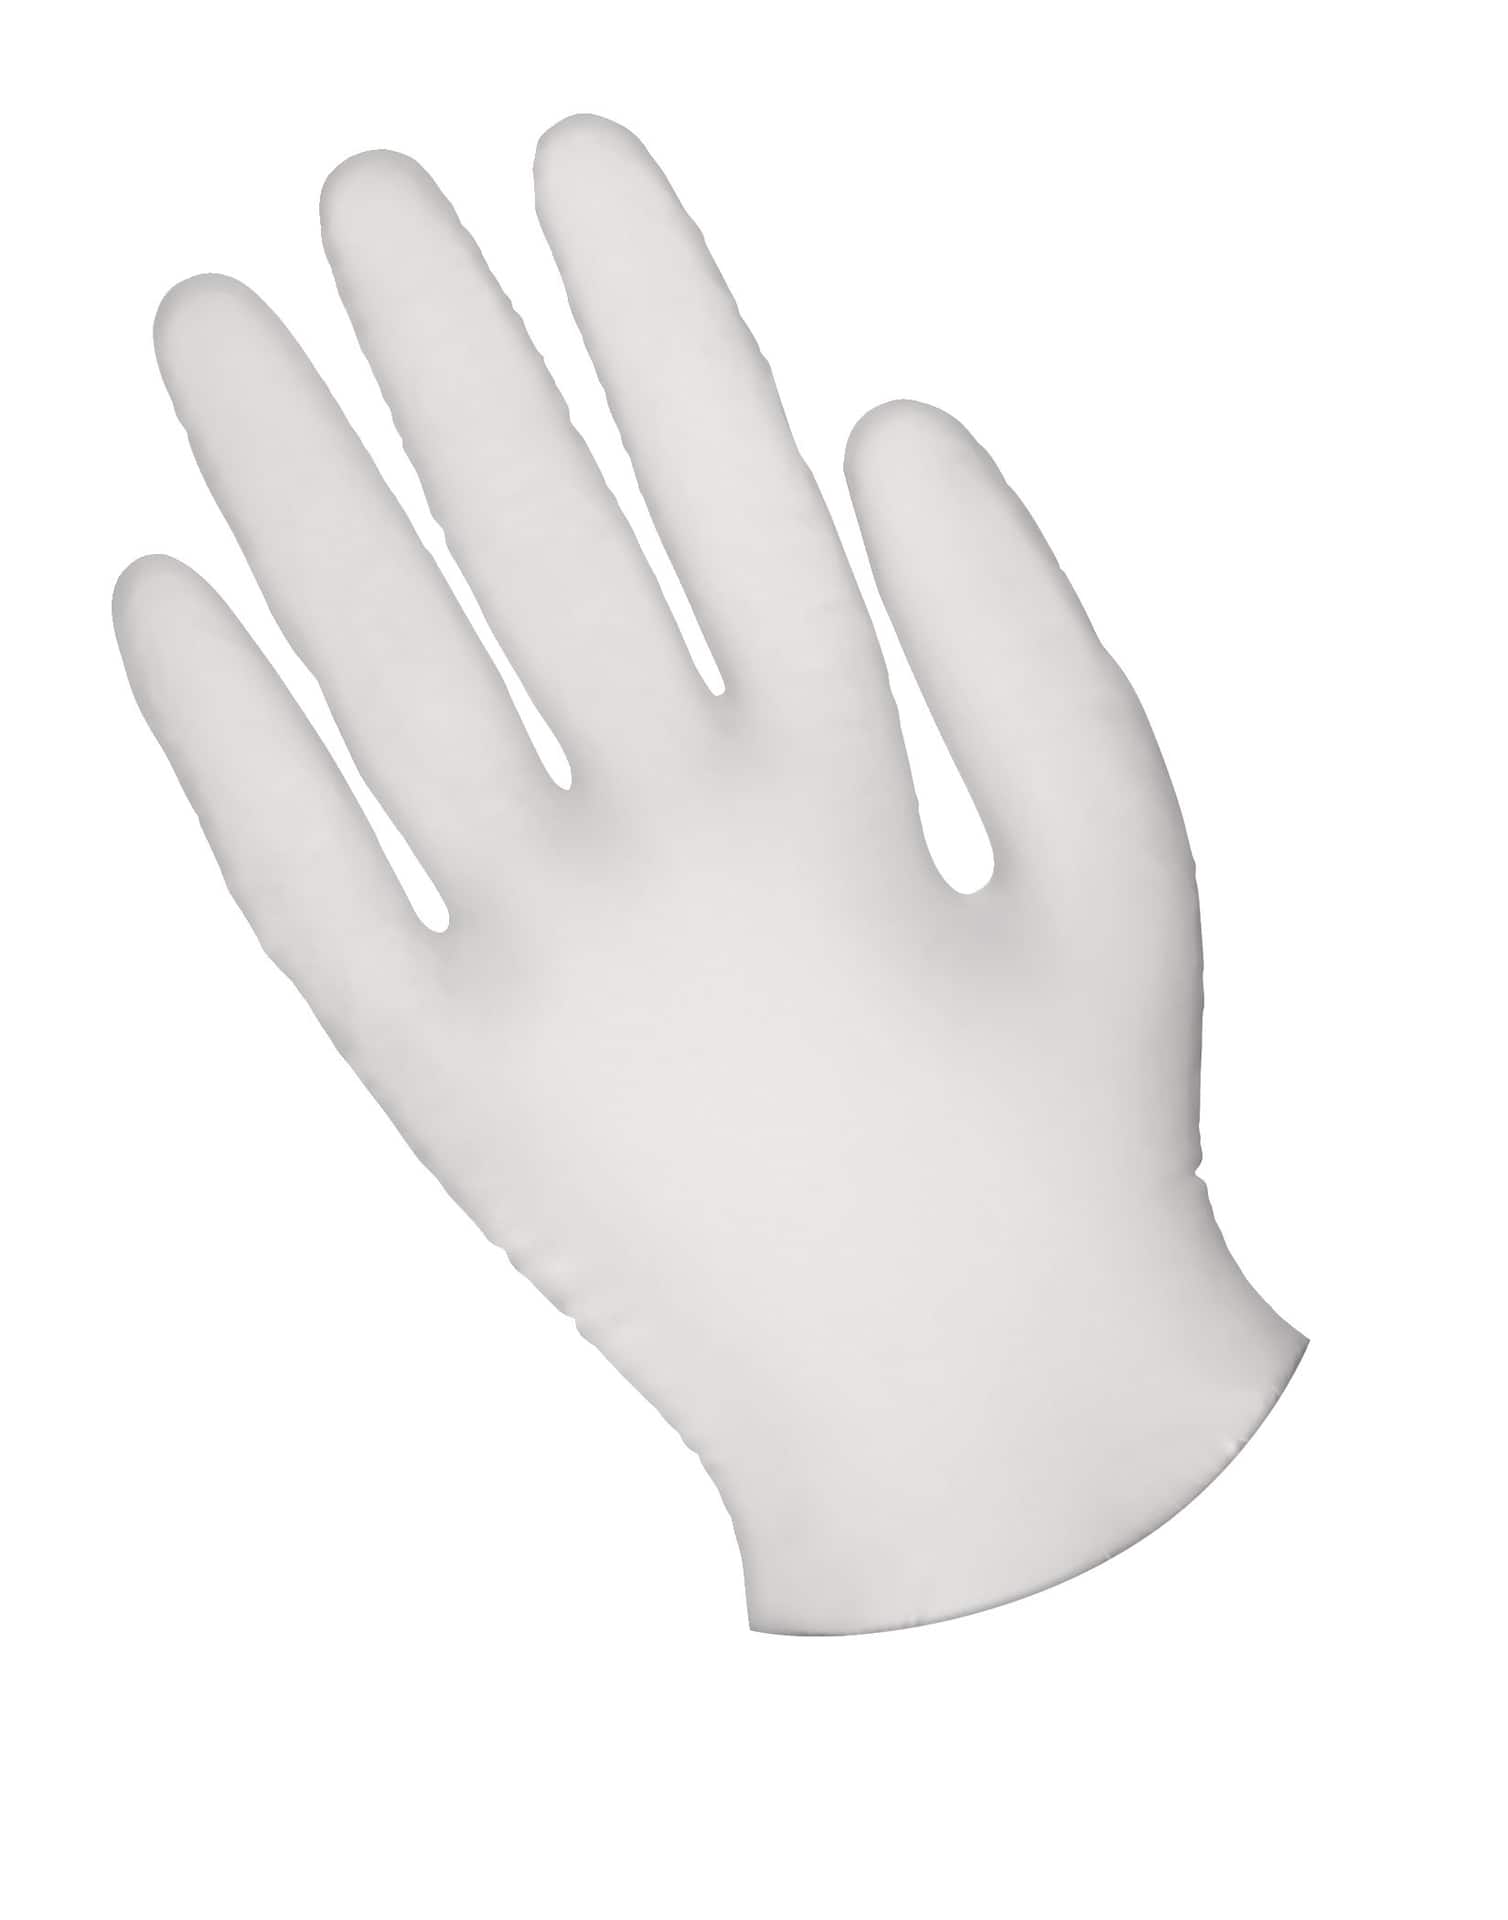 FRANK Multi-Purpose Disposable Vinyl Gloves, Latex Free, 100-pk